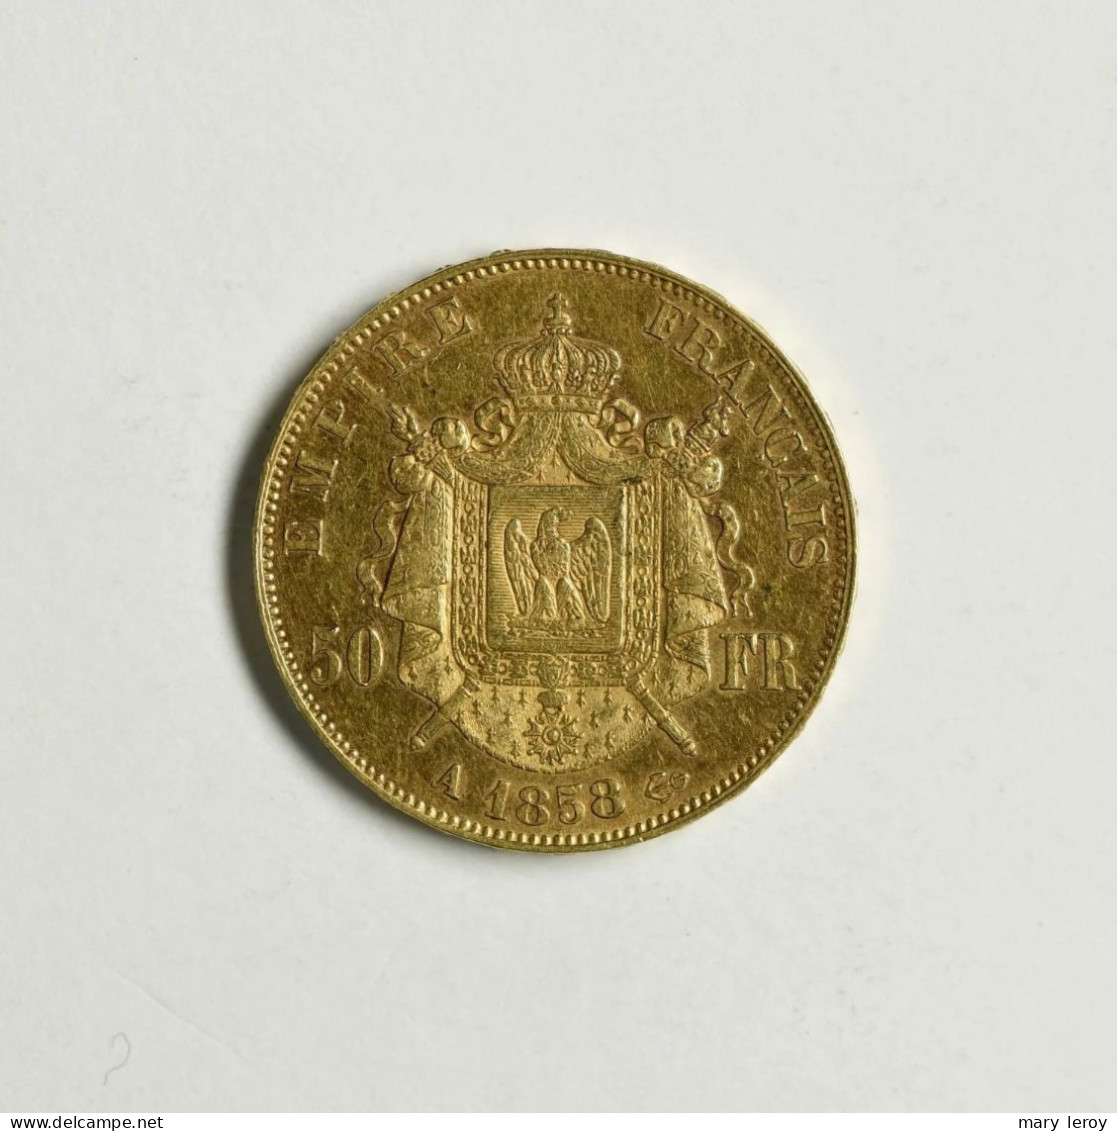 Superbe & Rare Pièce De 50 Francs Napoléon Paris 1858 G. 1111 - 50 Francs (or)